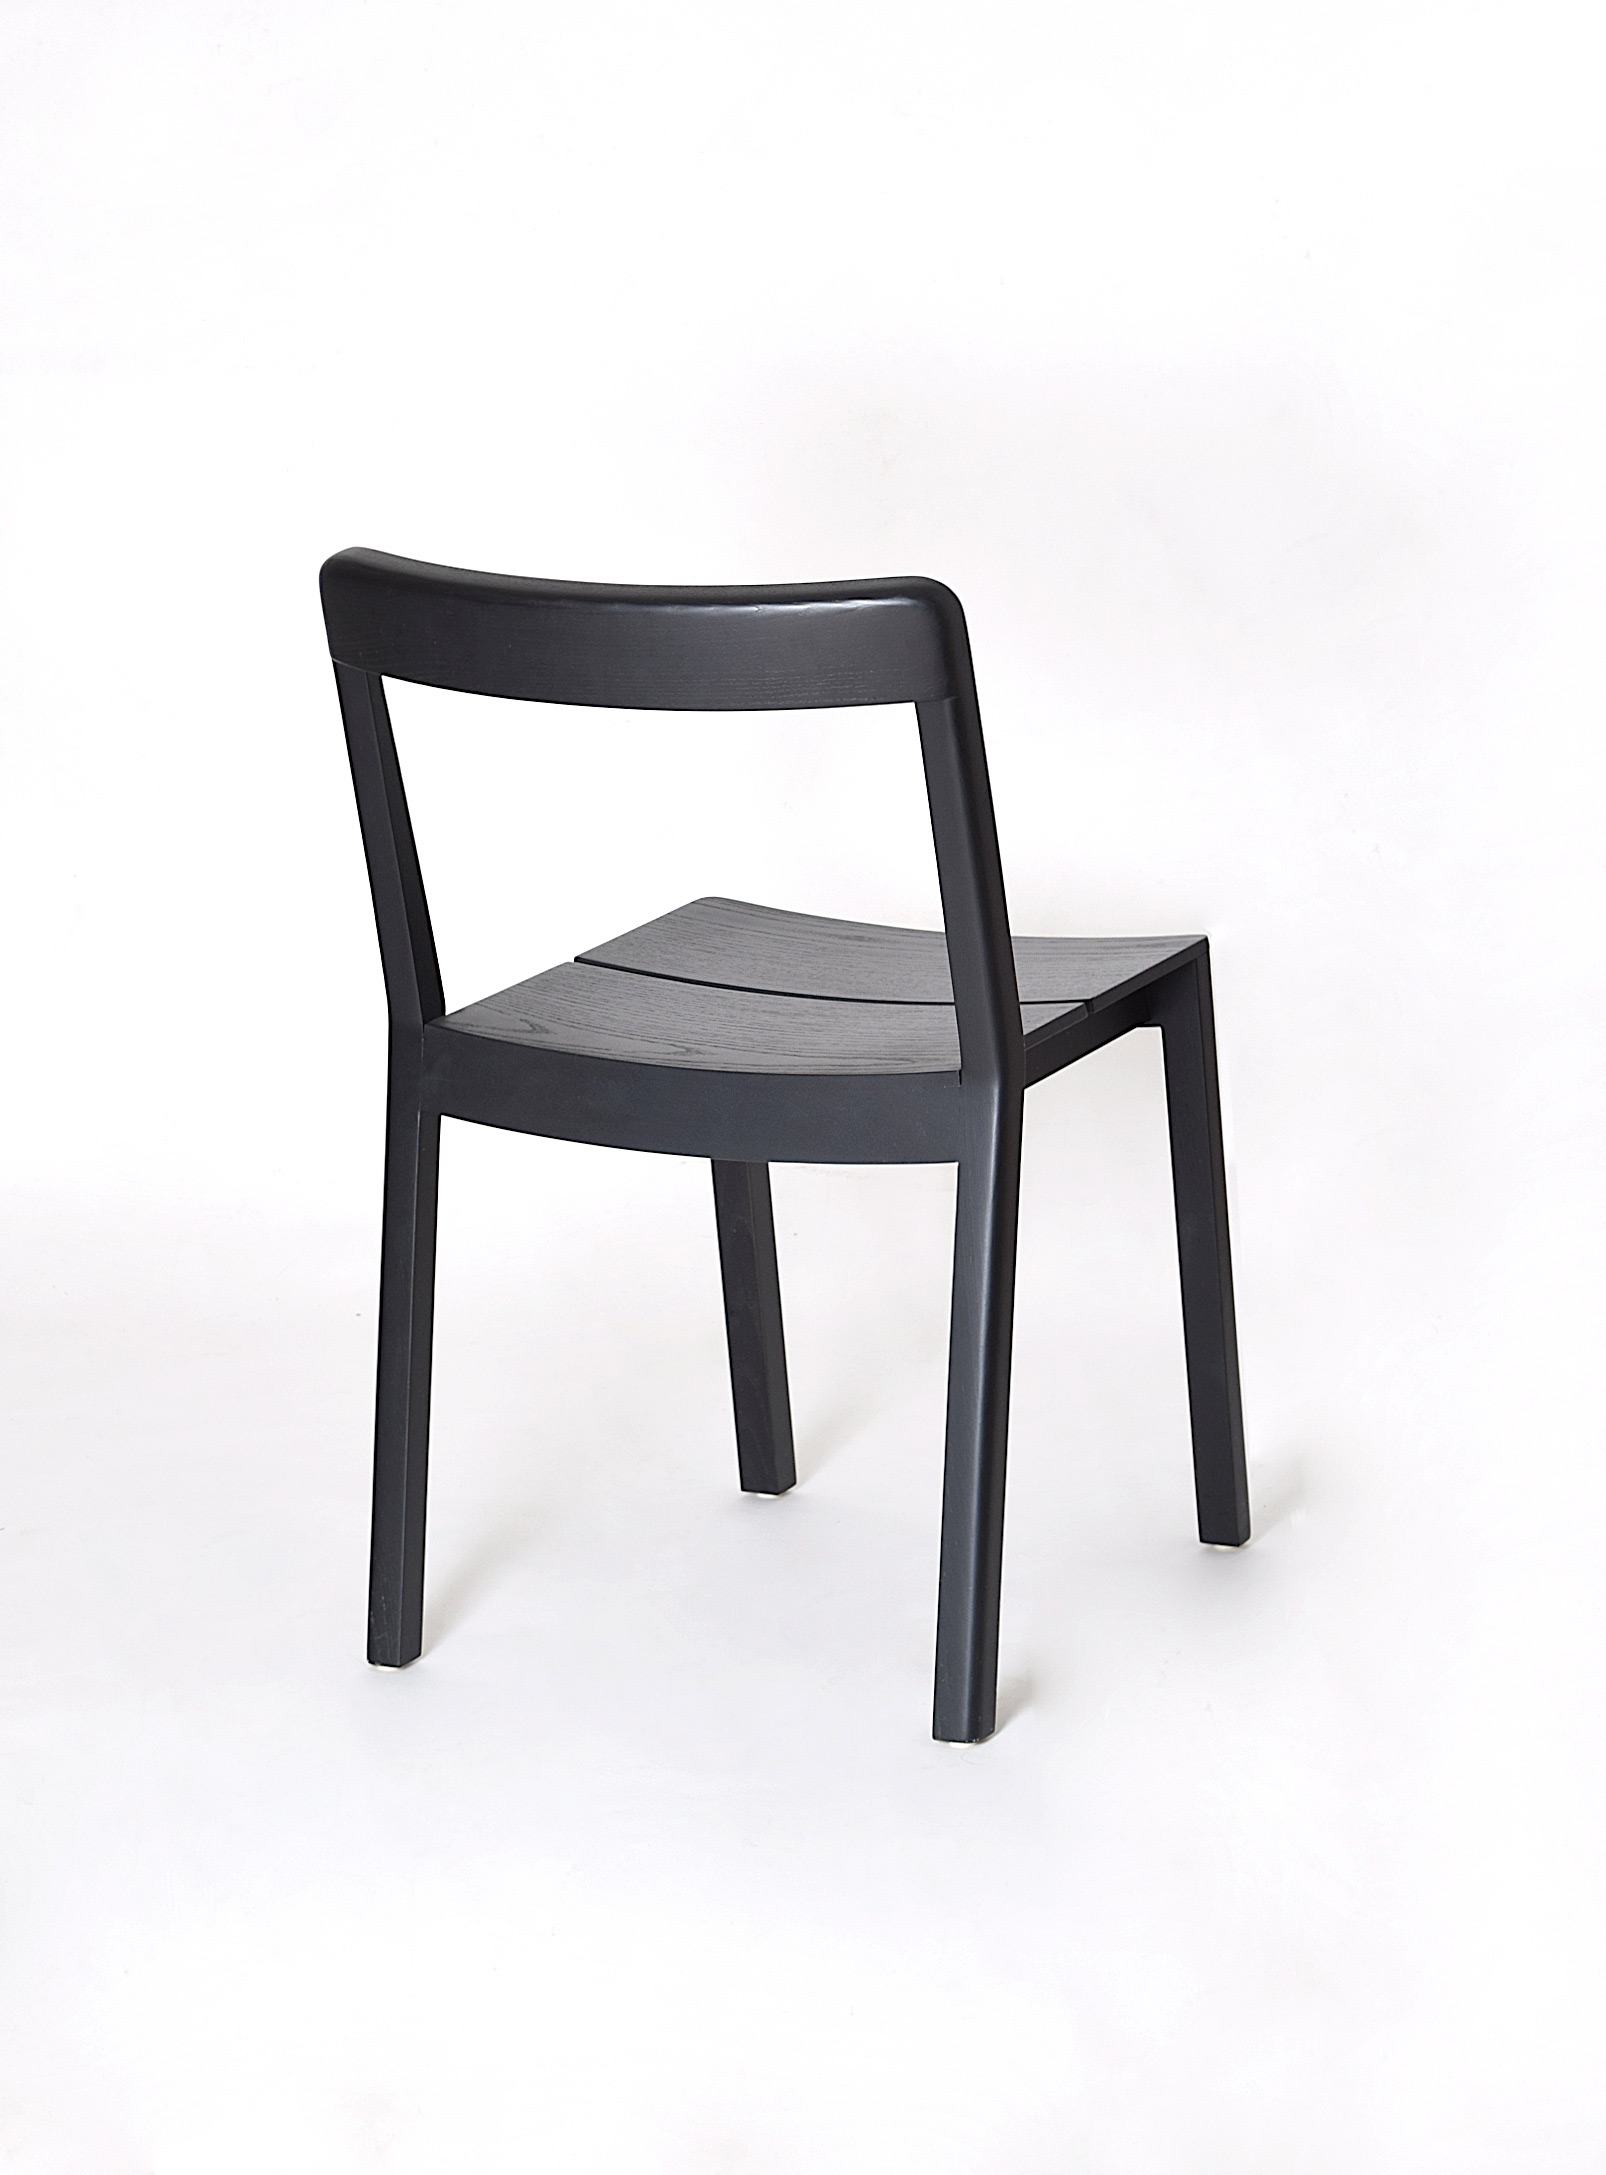 Essai Mobilier Same, Same Wooden Chair In Black